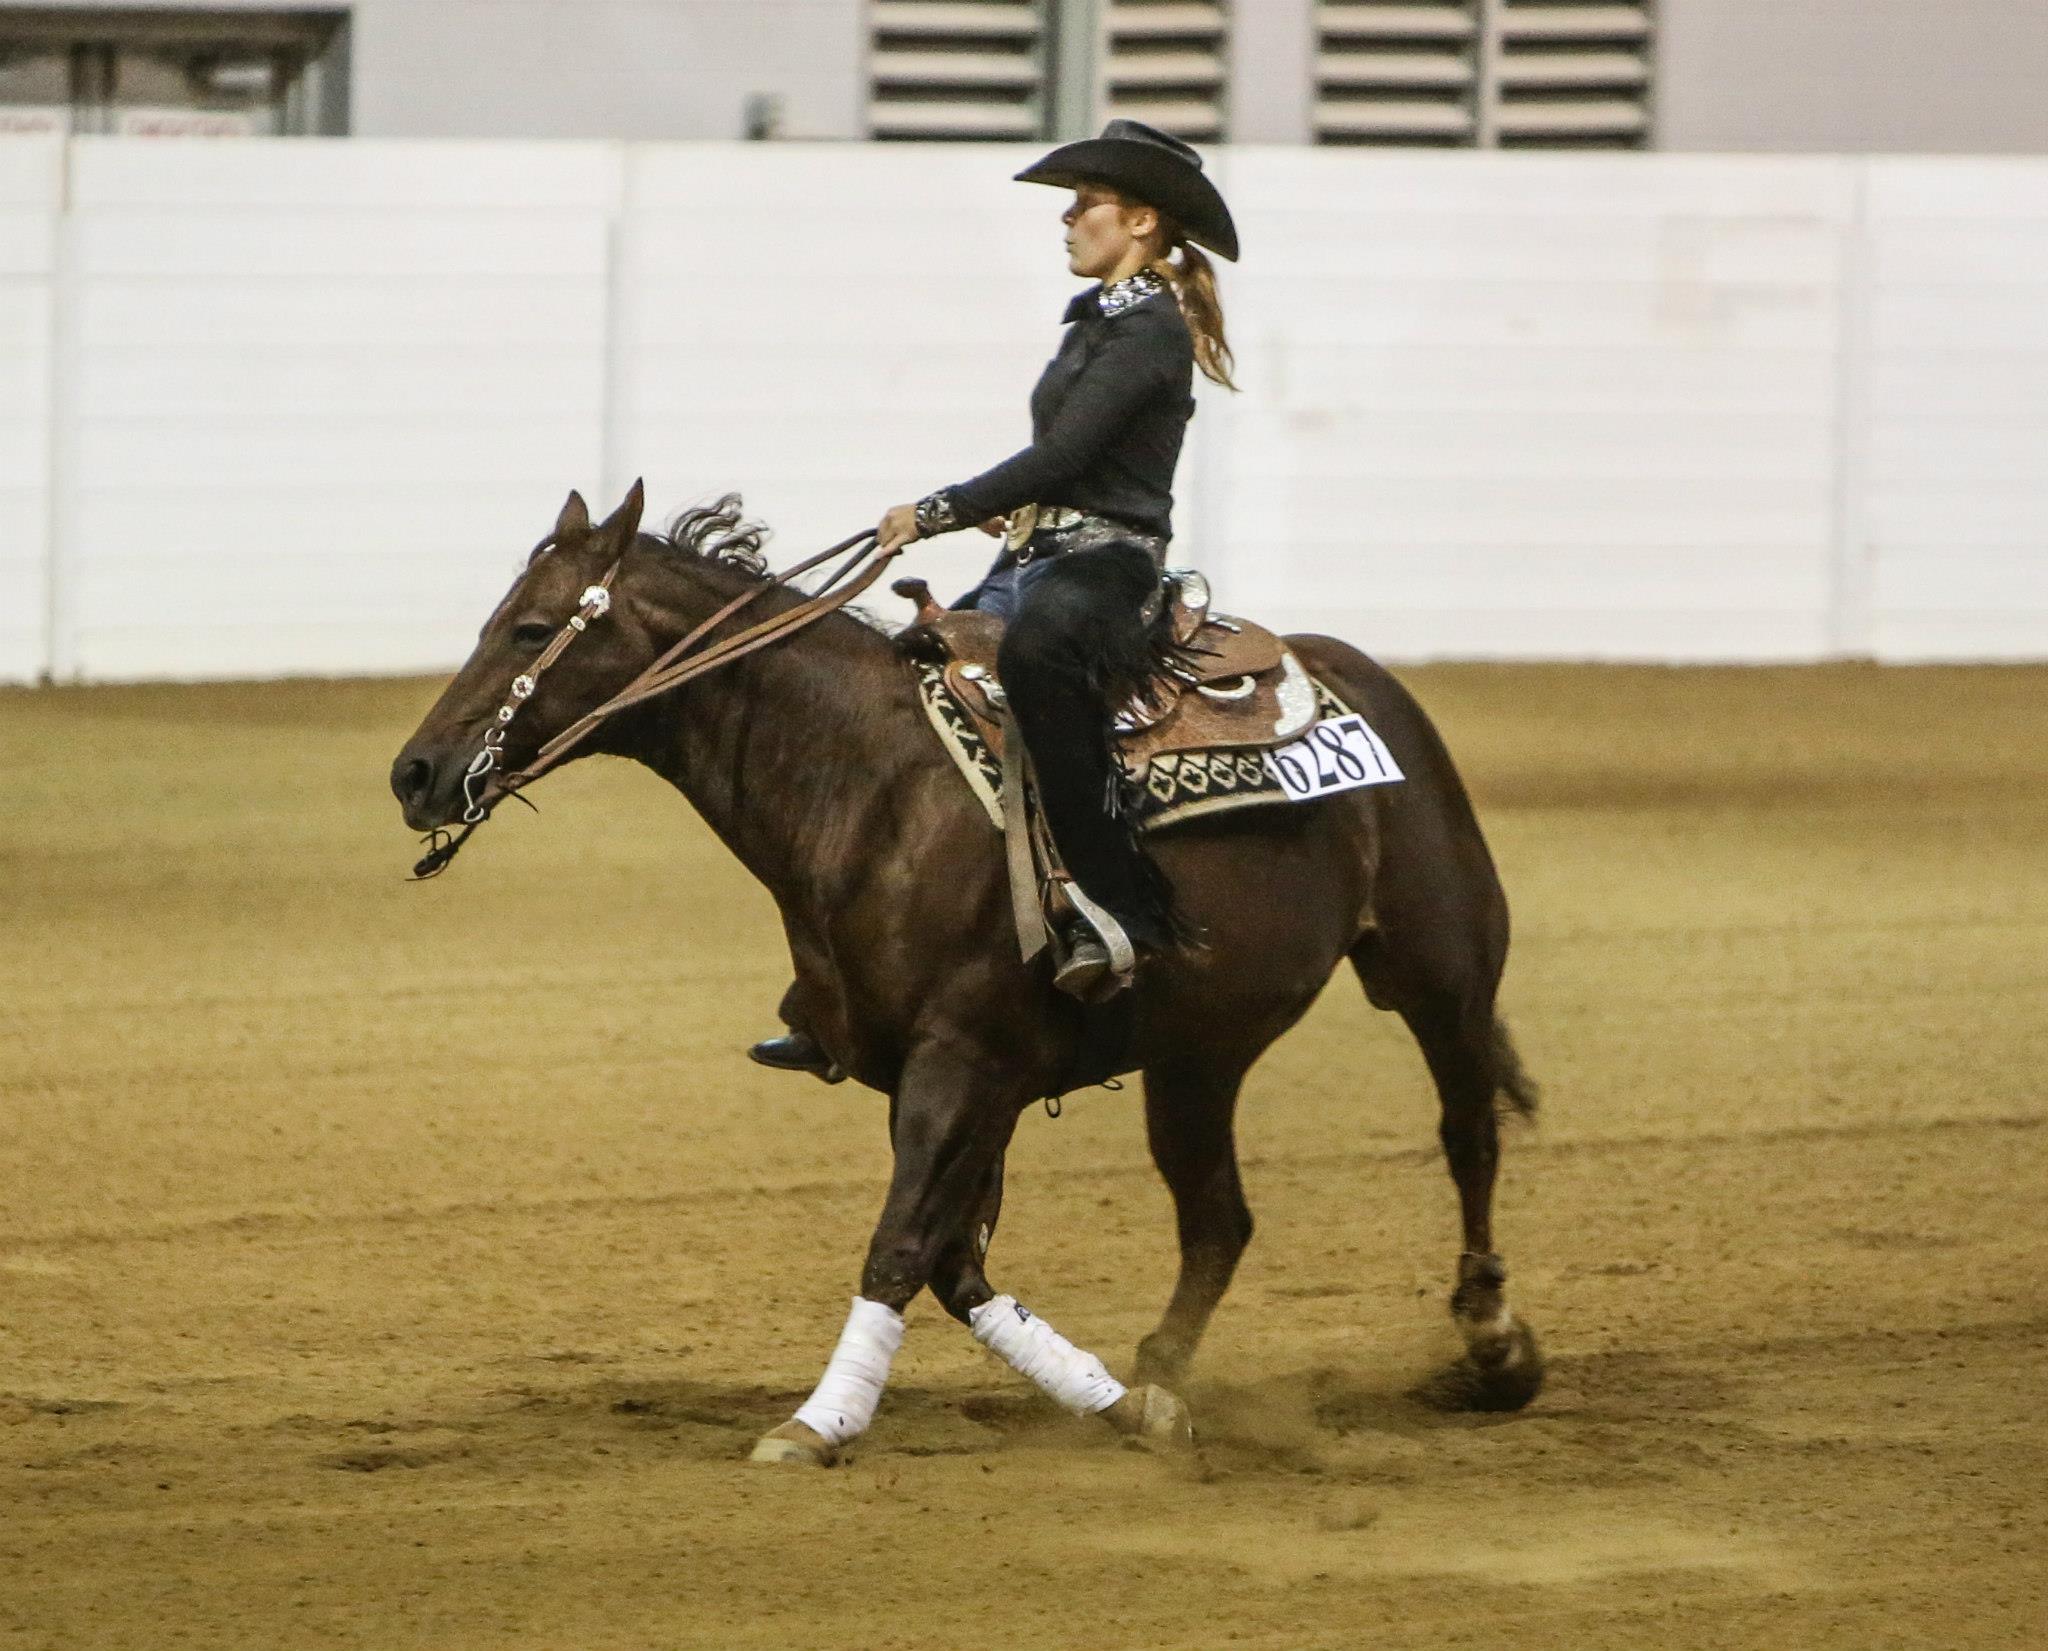 American Quarter Horse and women